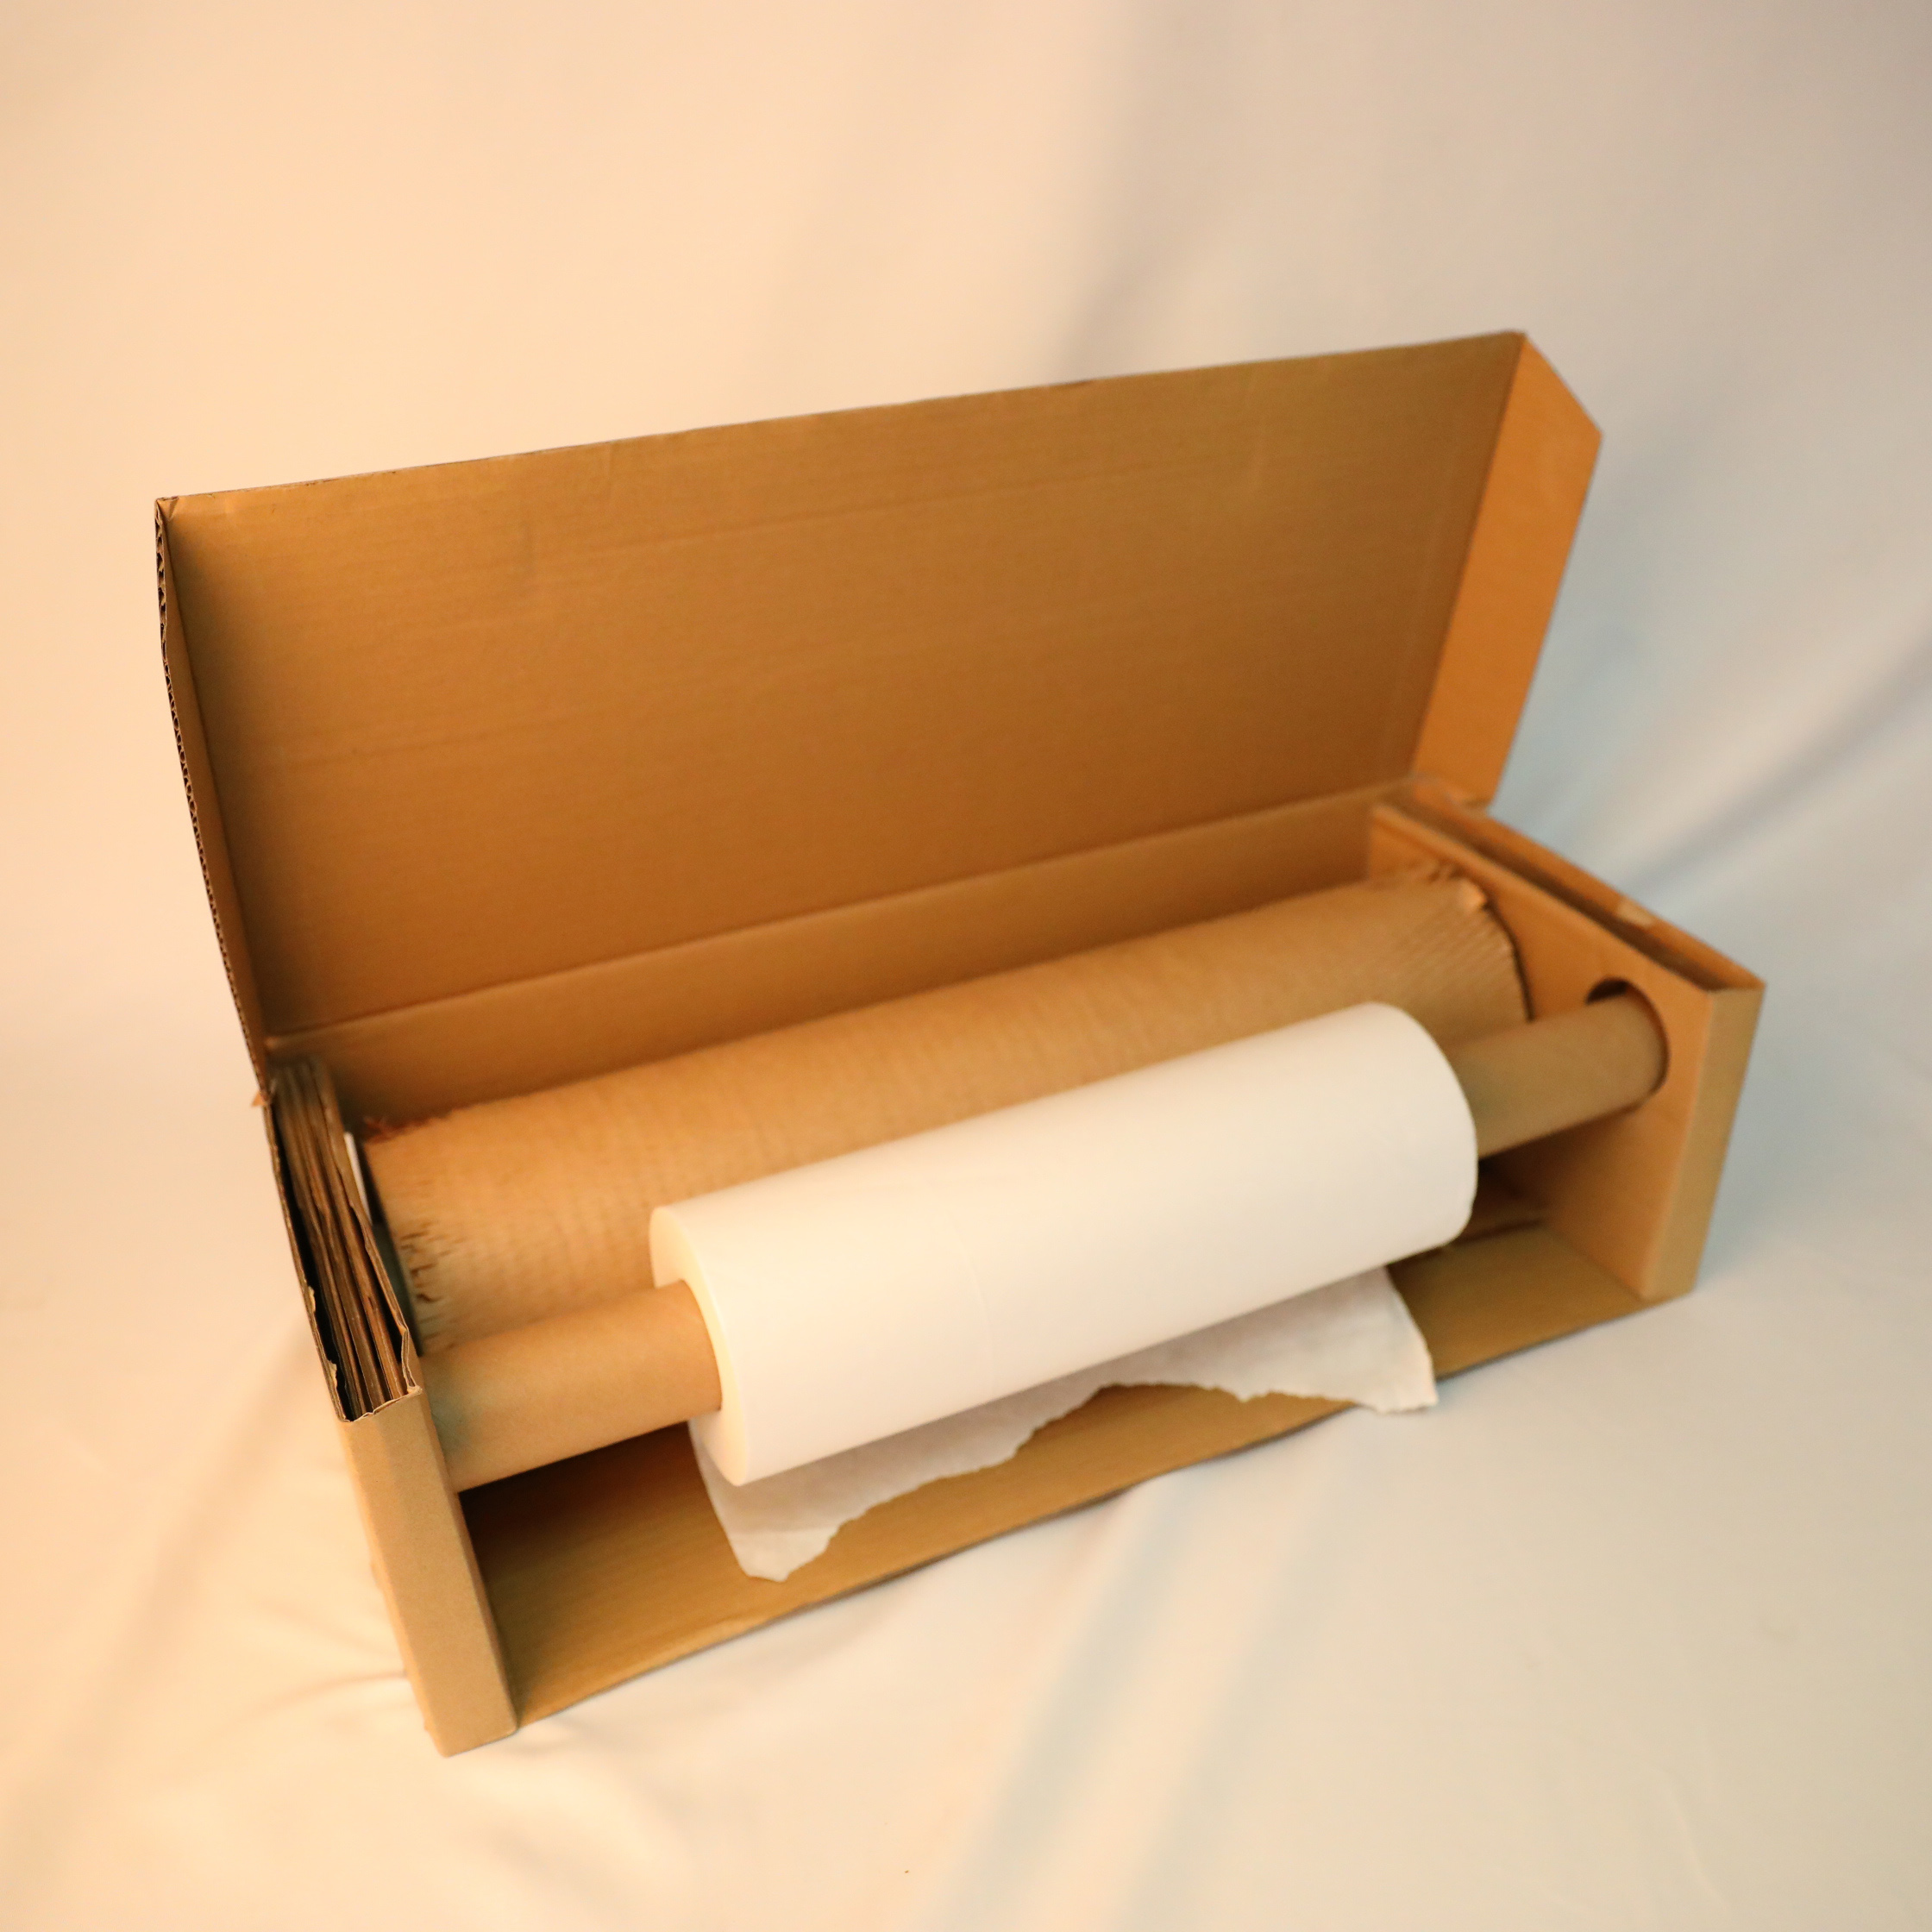 Recycelbare Wabenpapierrollen zum Verpacken von Waren